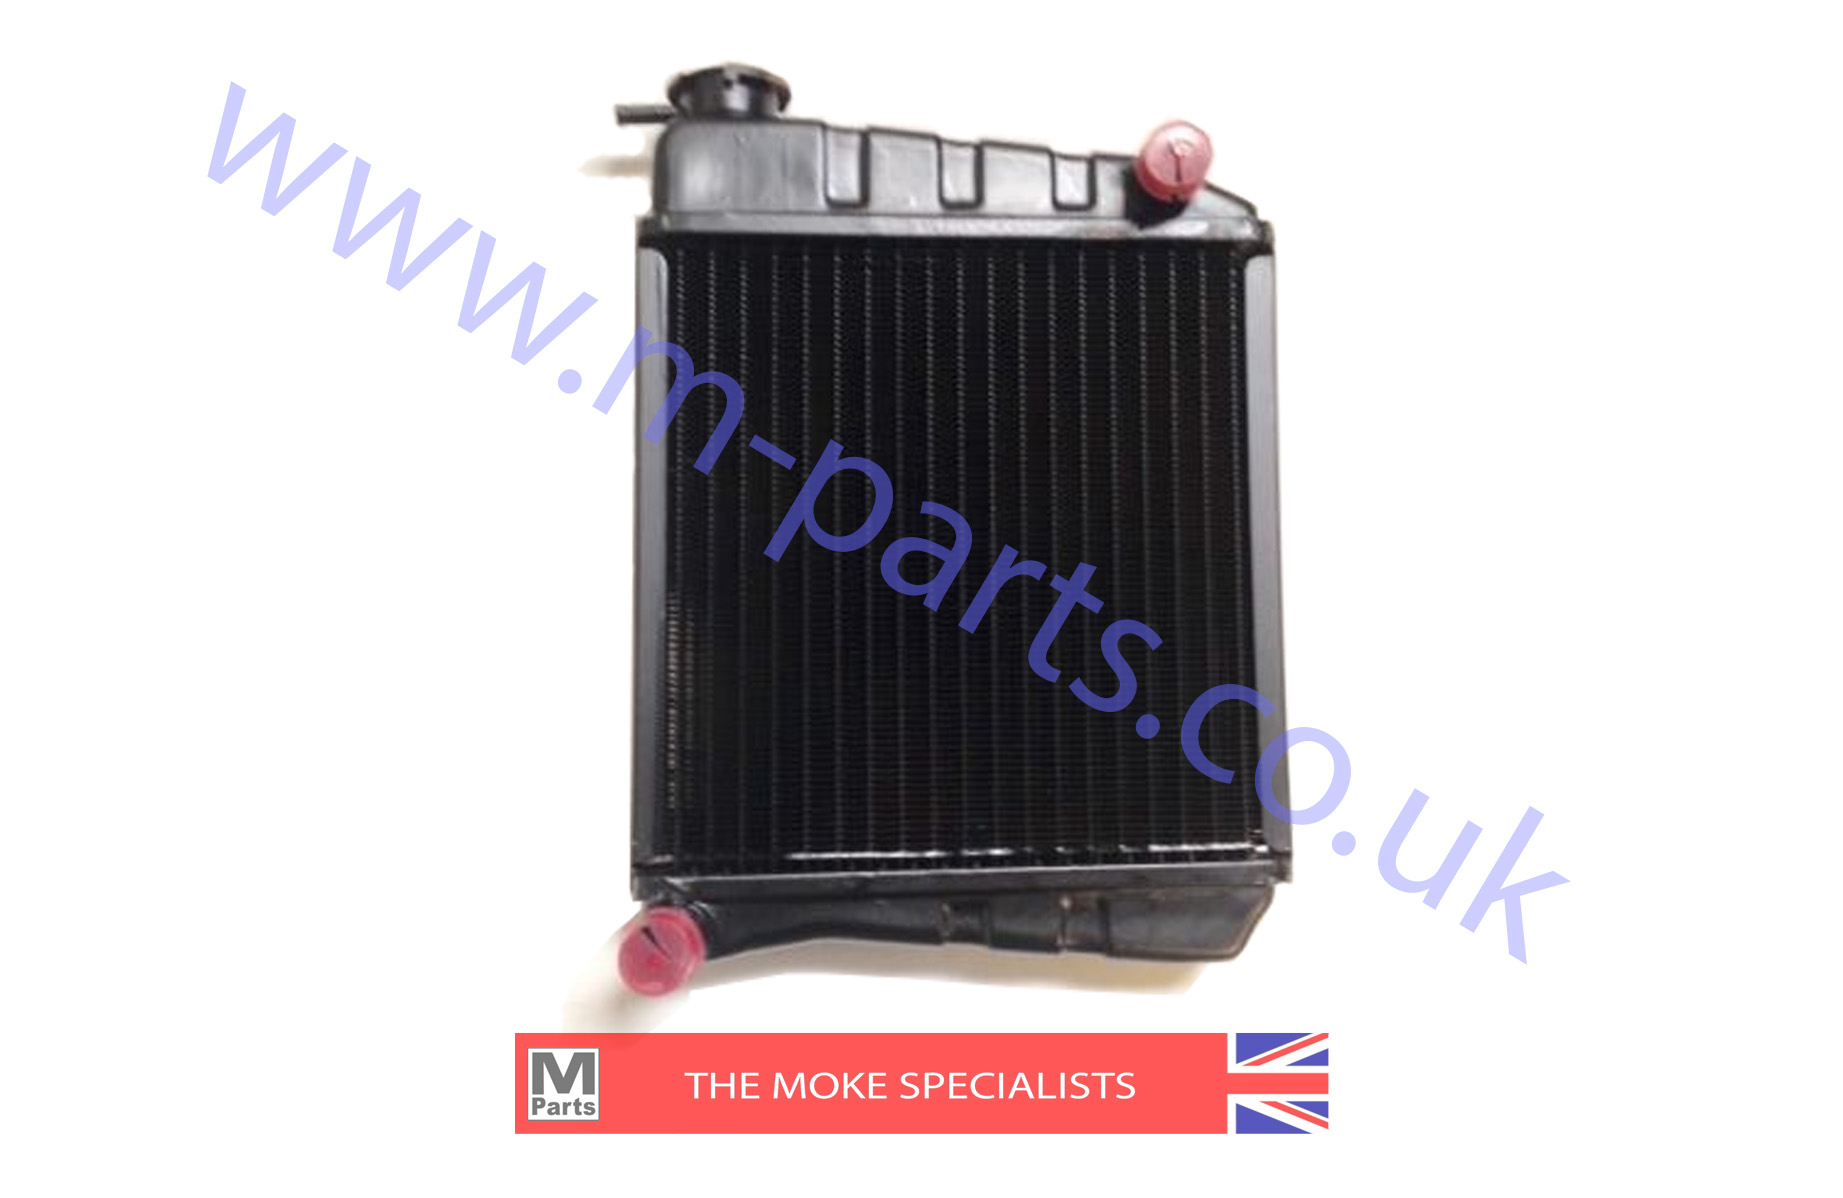 1. Standard English side mounted radiator